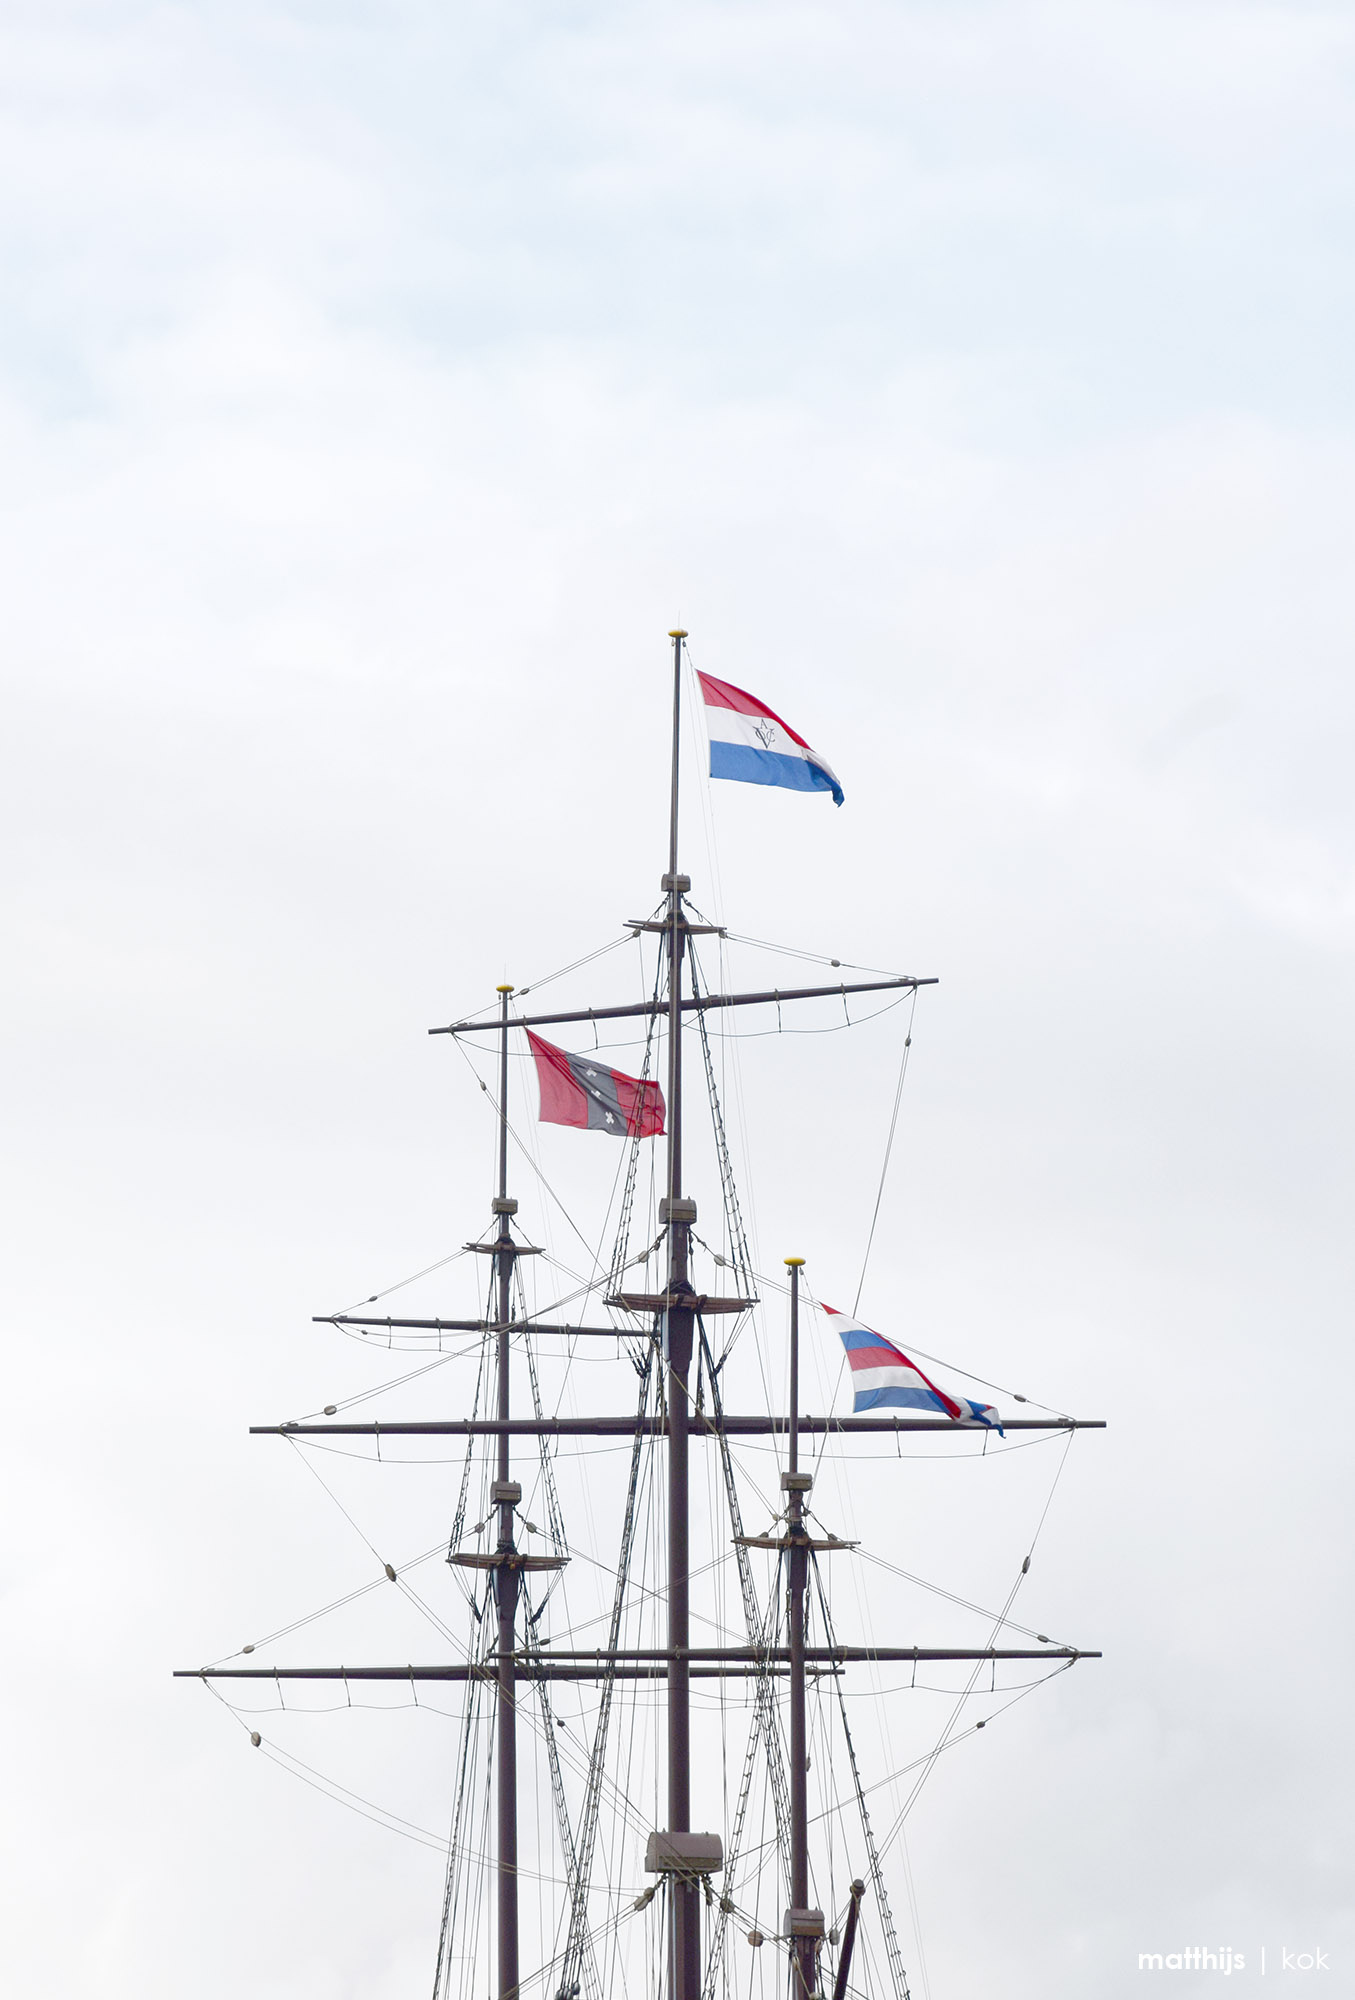 VOC Ship The Amsterdam, The Netherlands | Photography by Matthijs Kok